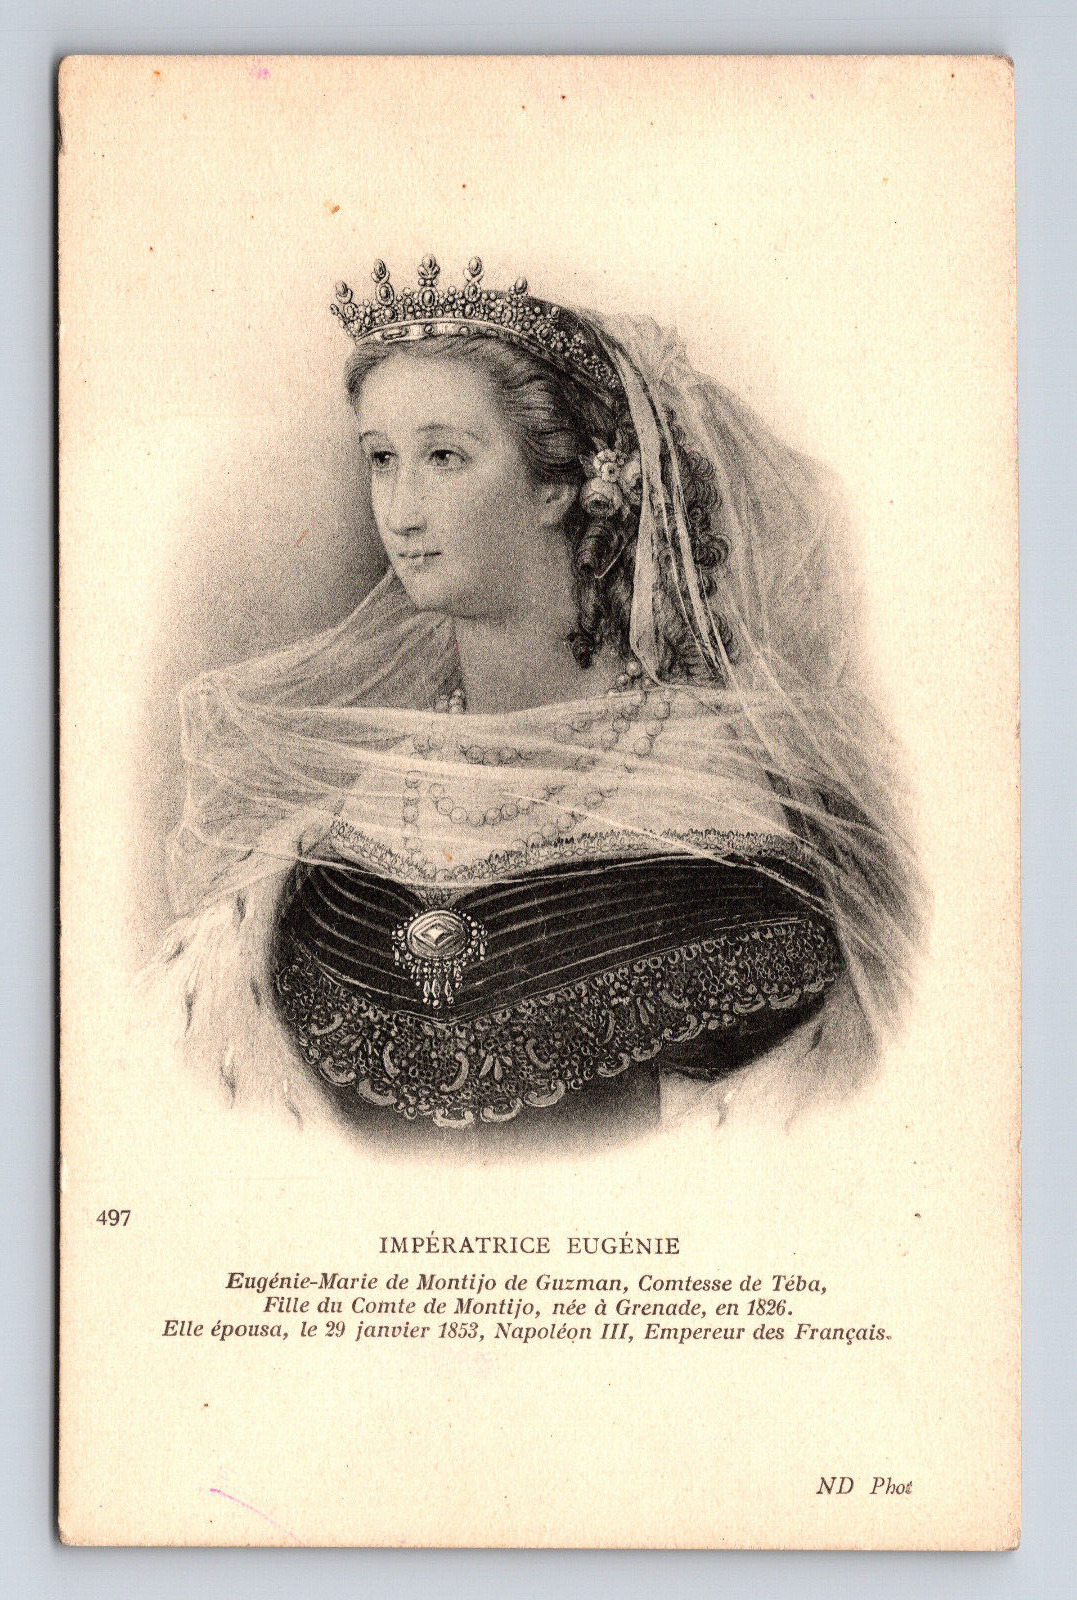 Portrait of Imperatrice Eugene Neurdein ND PHOT 497 Postcard